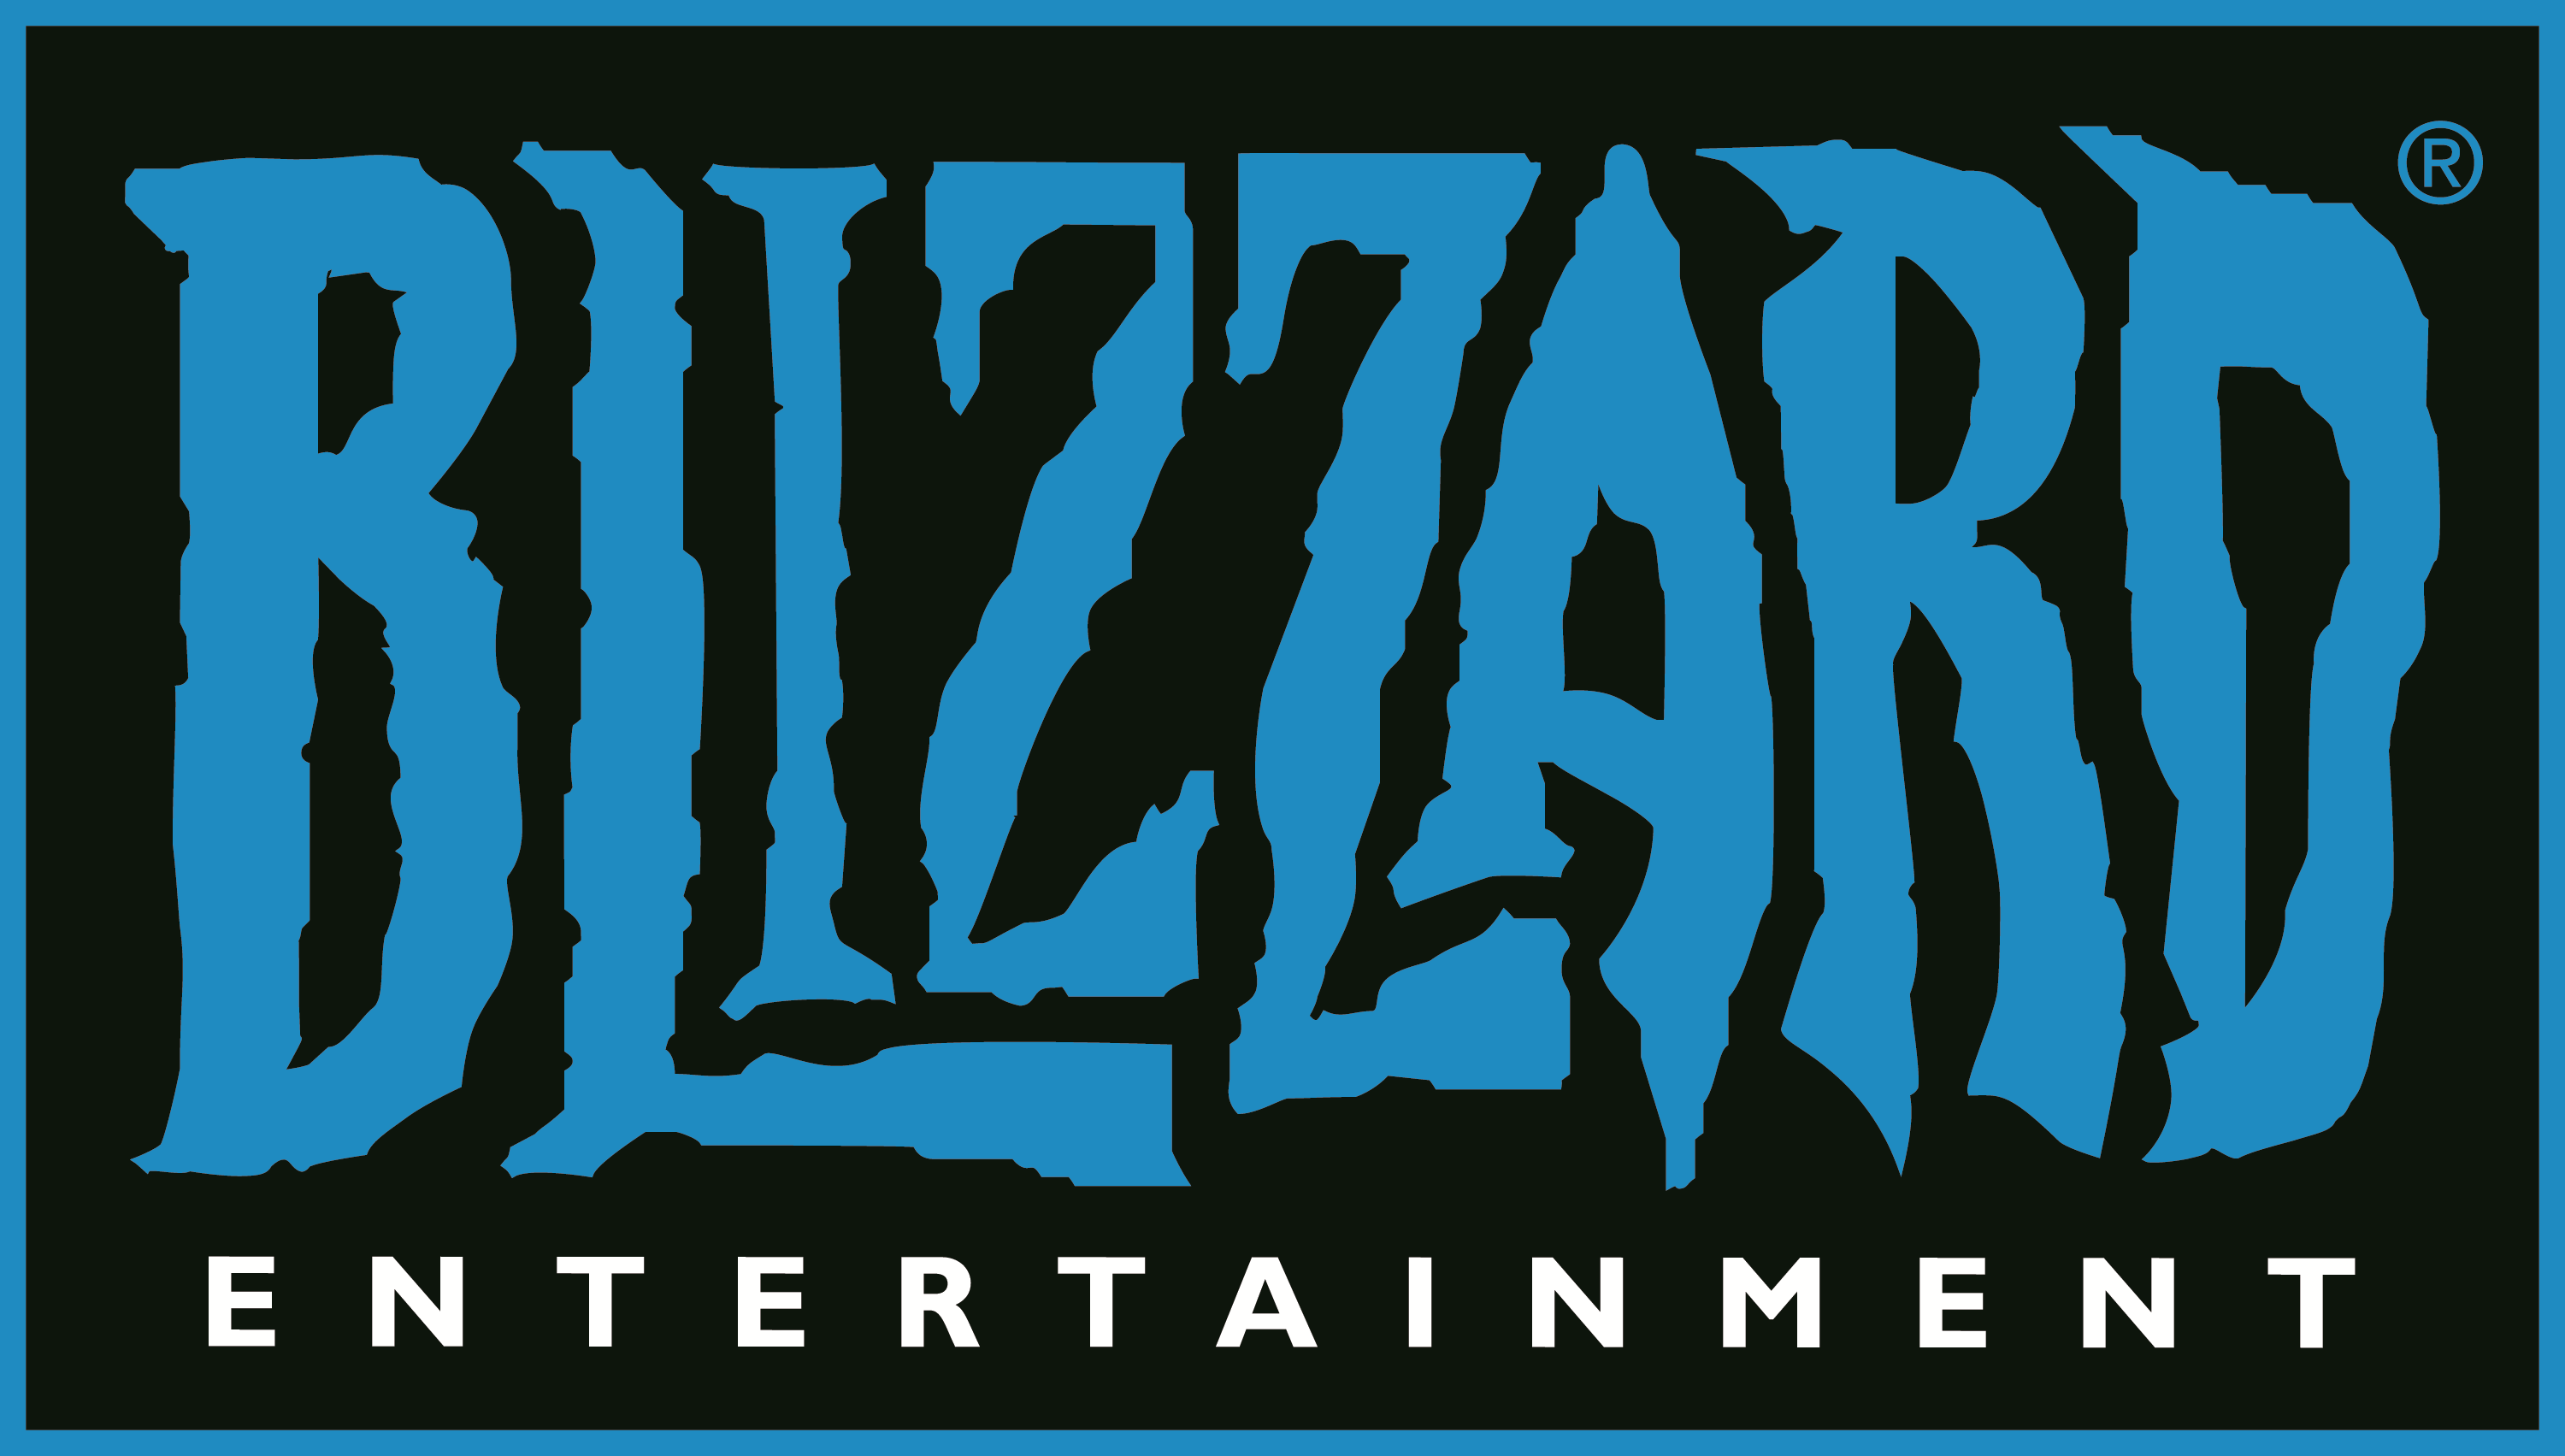 Blizzard_Entertainment_logo_blue_outline_on_black